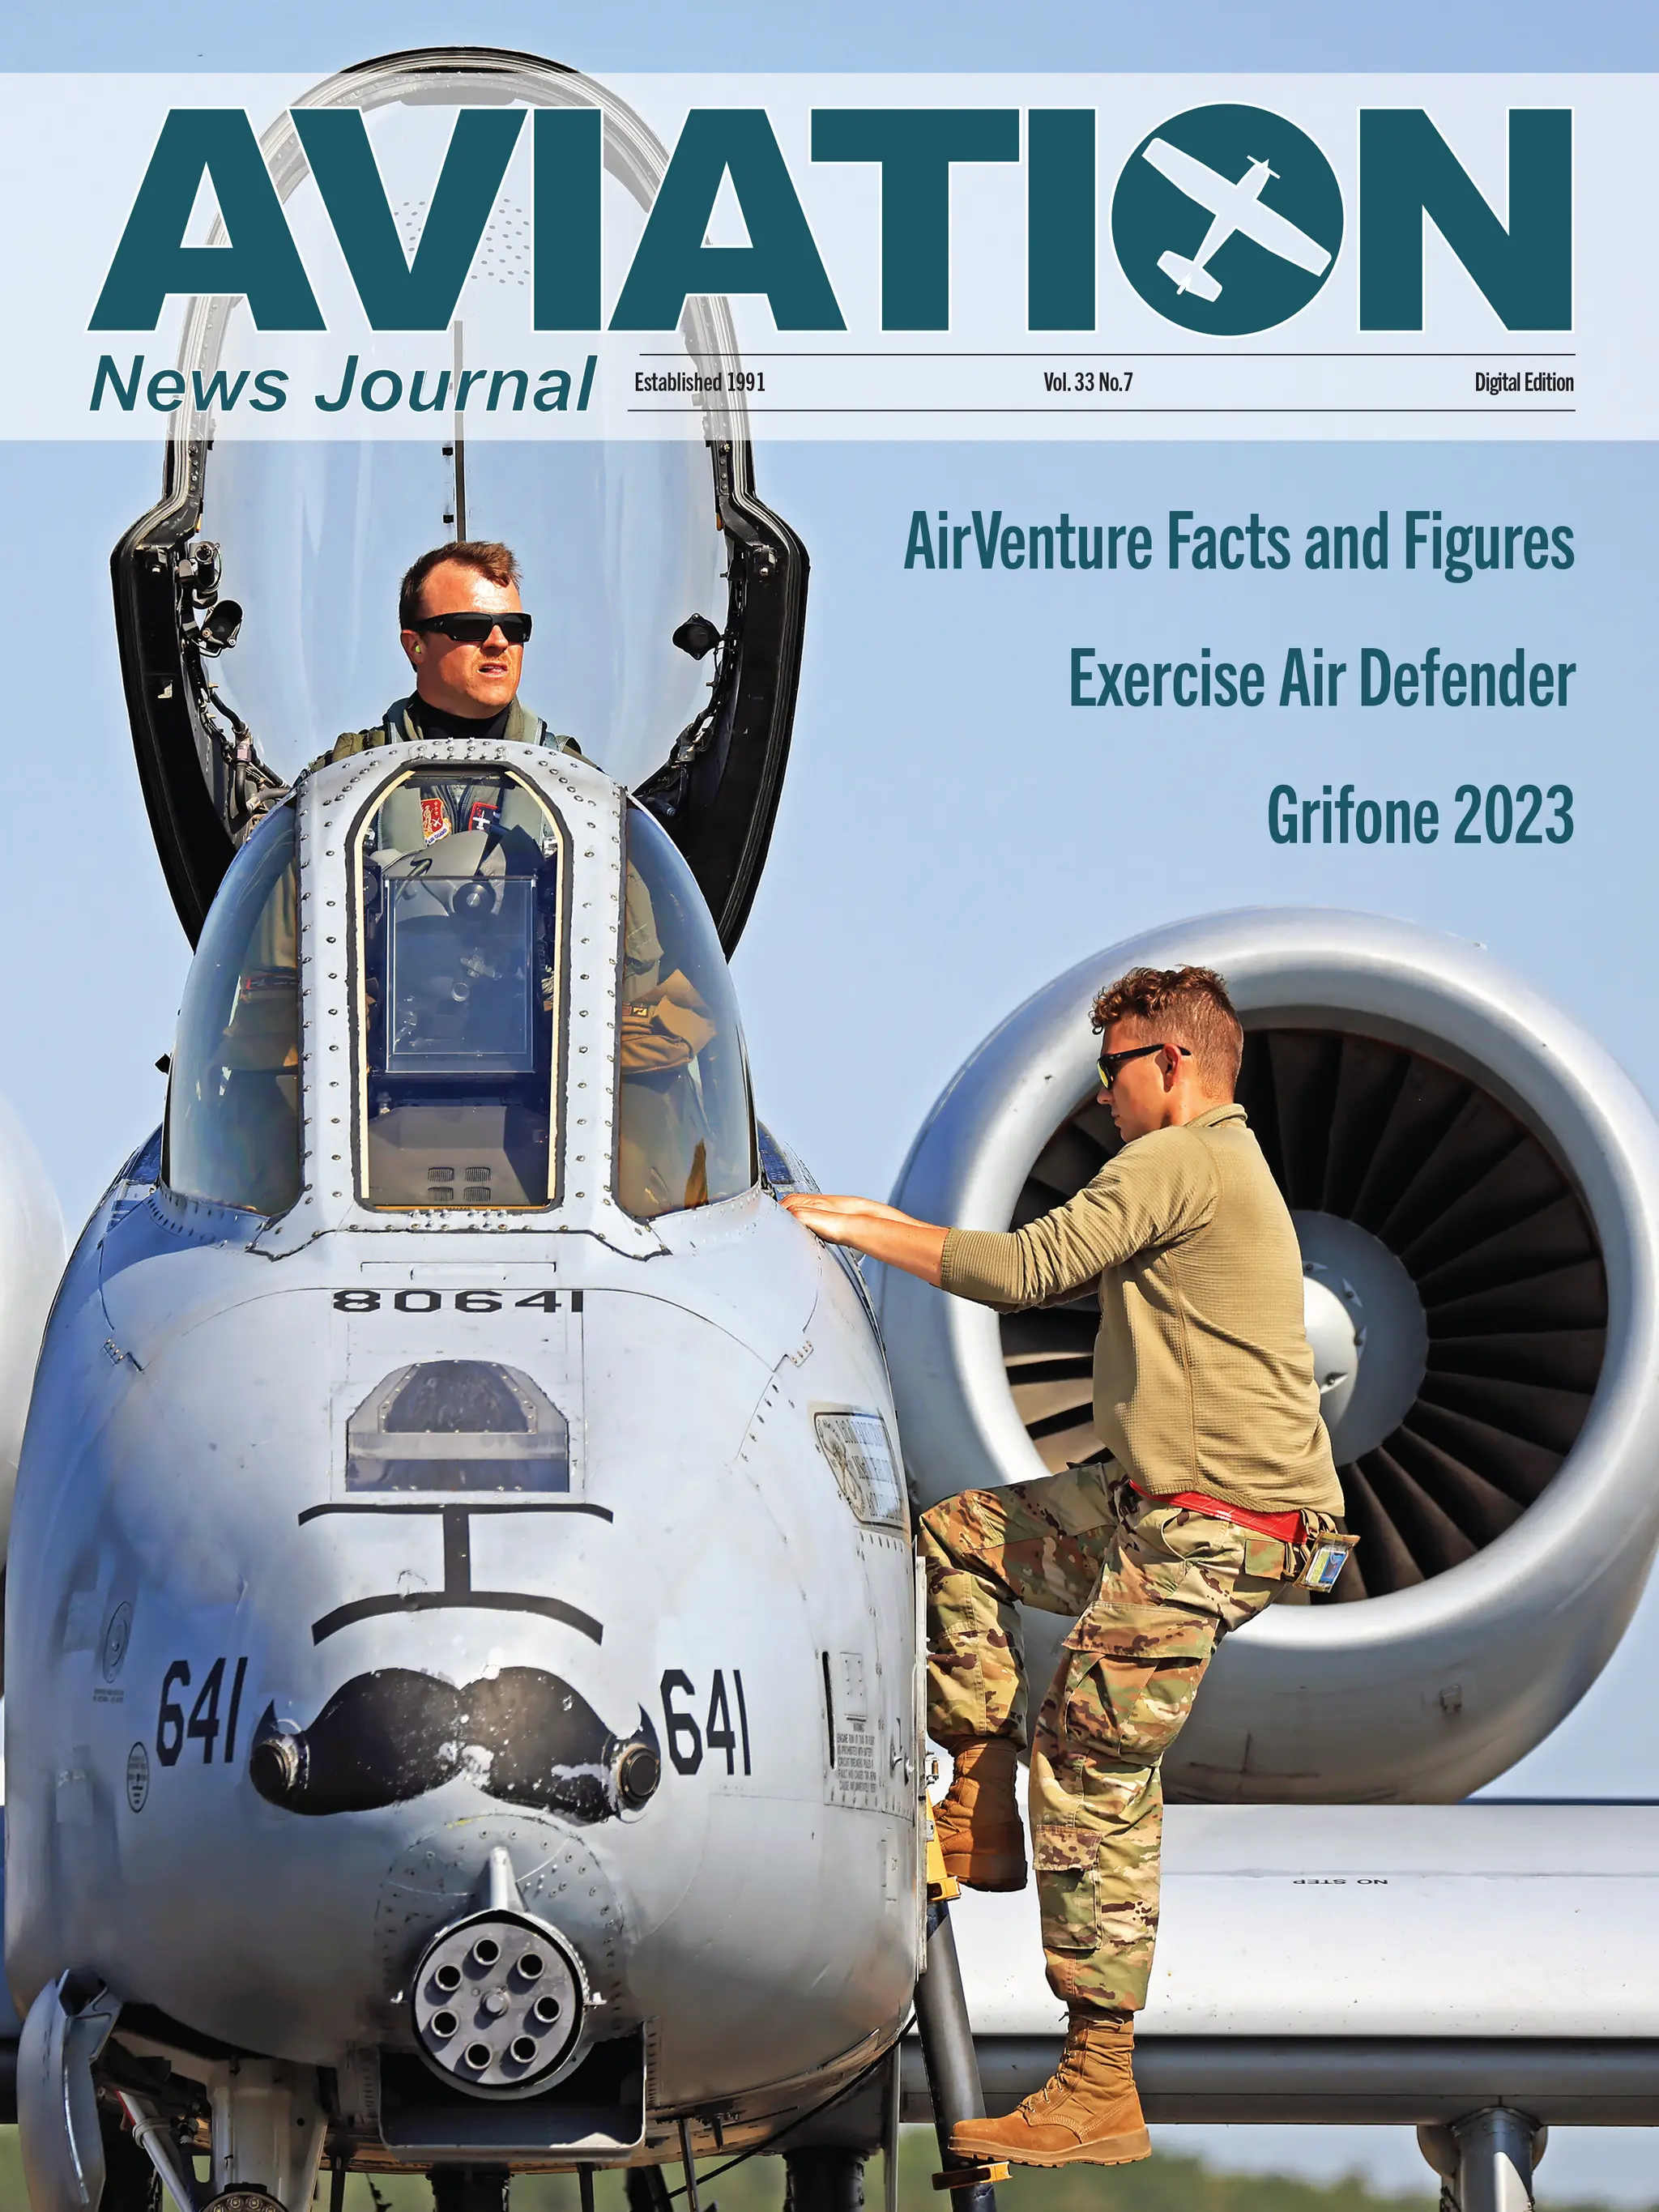 Aviation News Journal - Vol.33 No.7